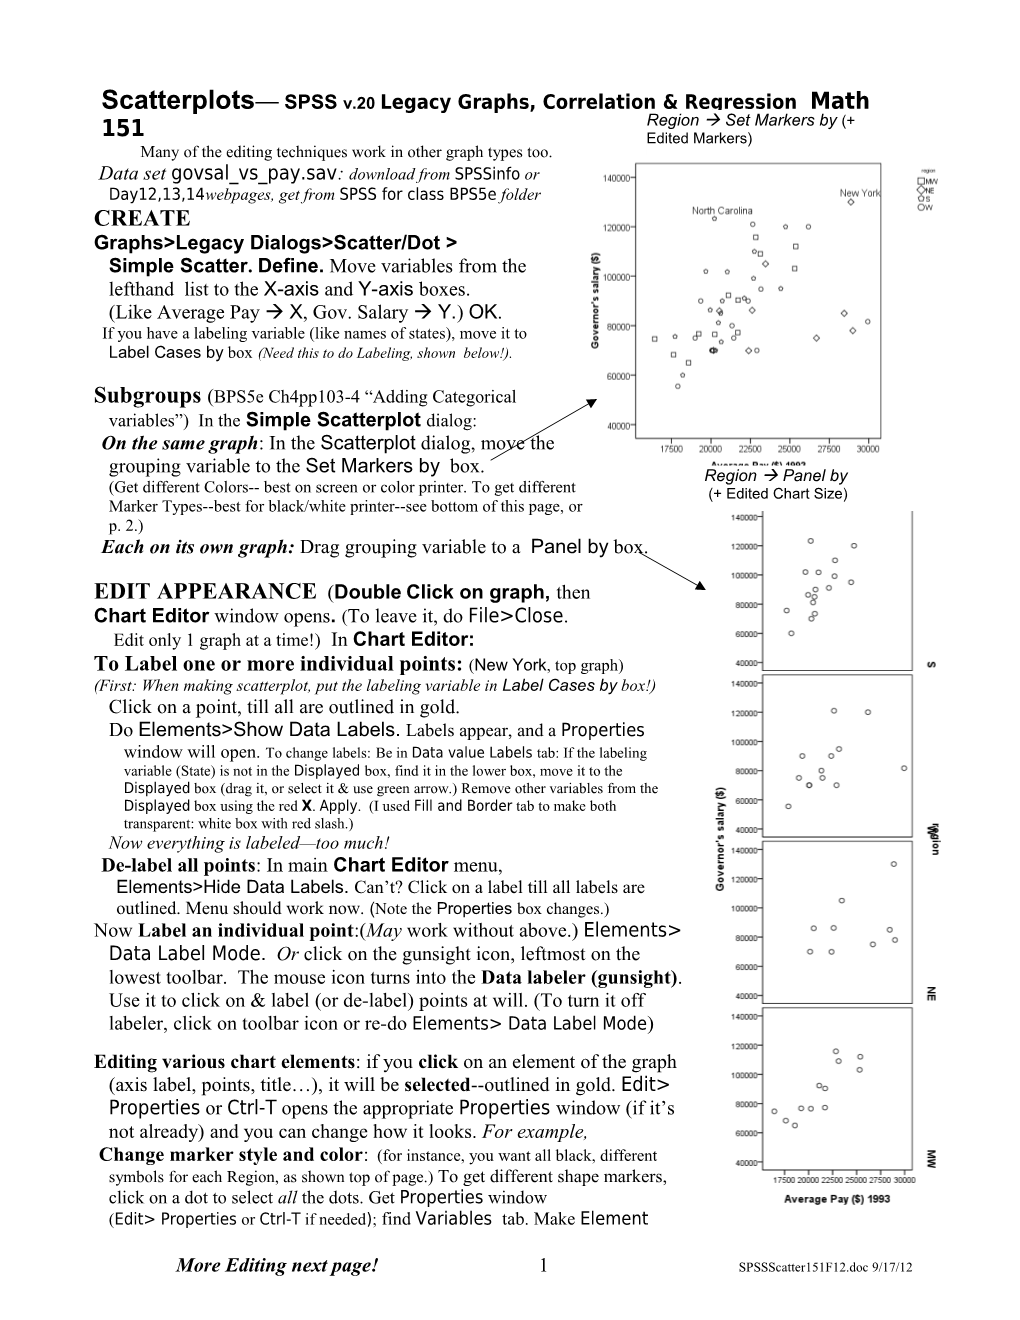 Scatterplots SPSS Interactive Graphs, Correlation & Regression